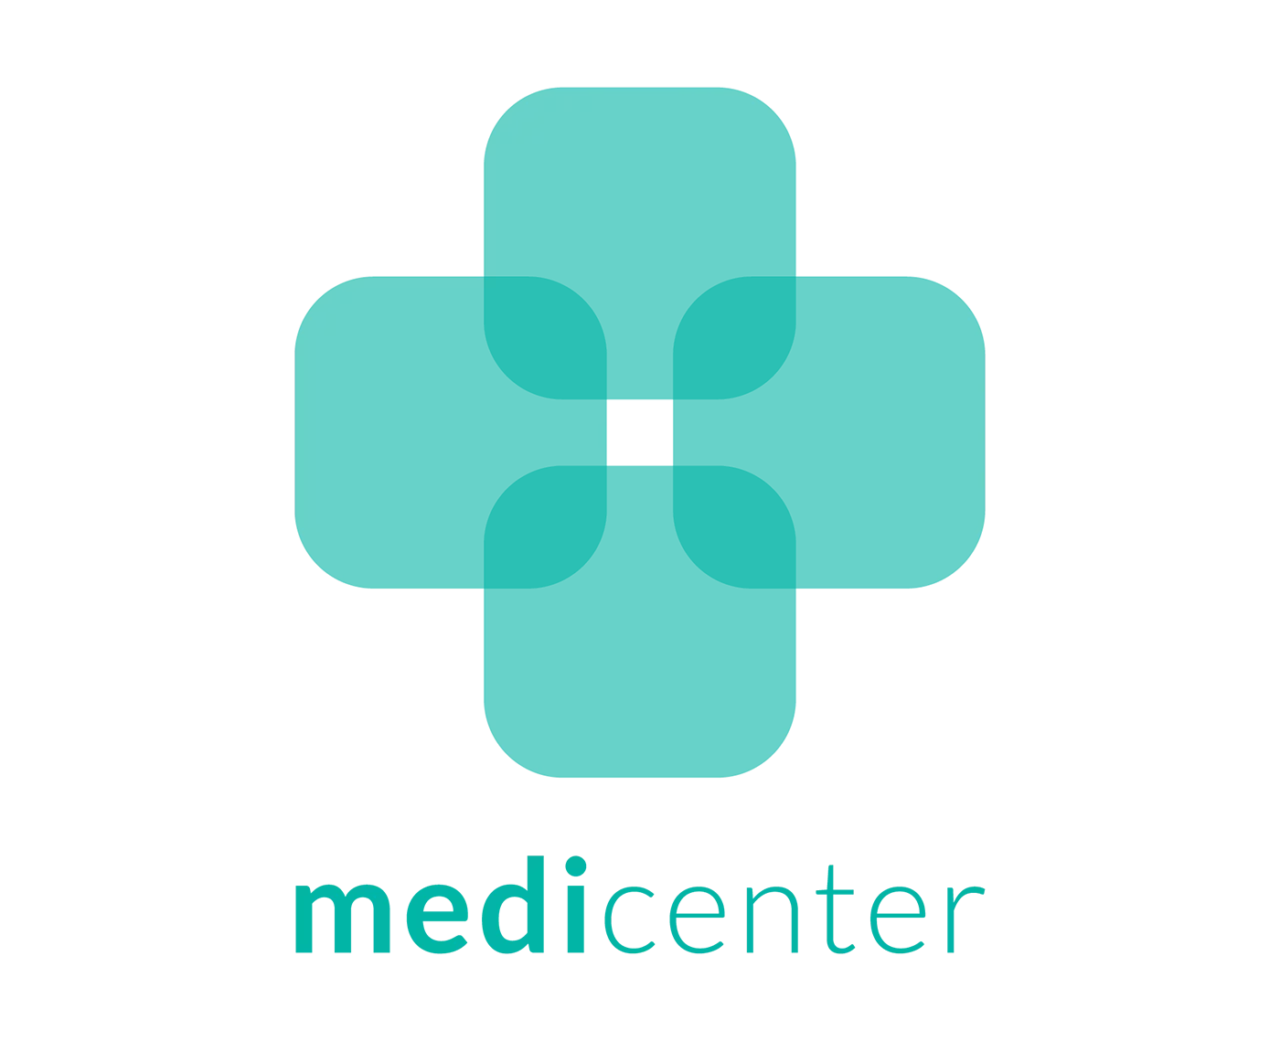 Medicenter logo in turquoise